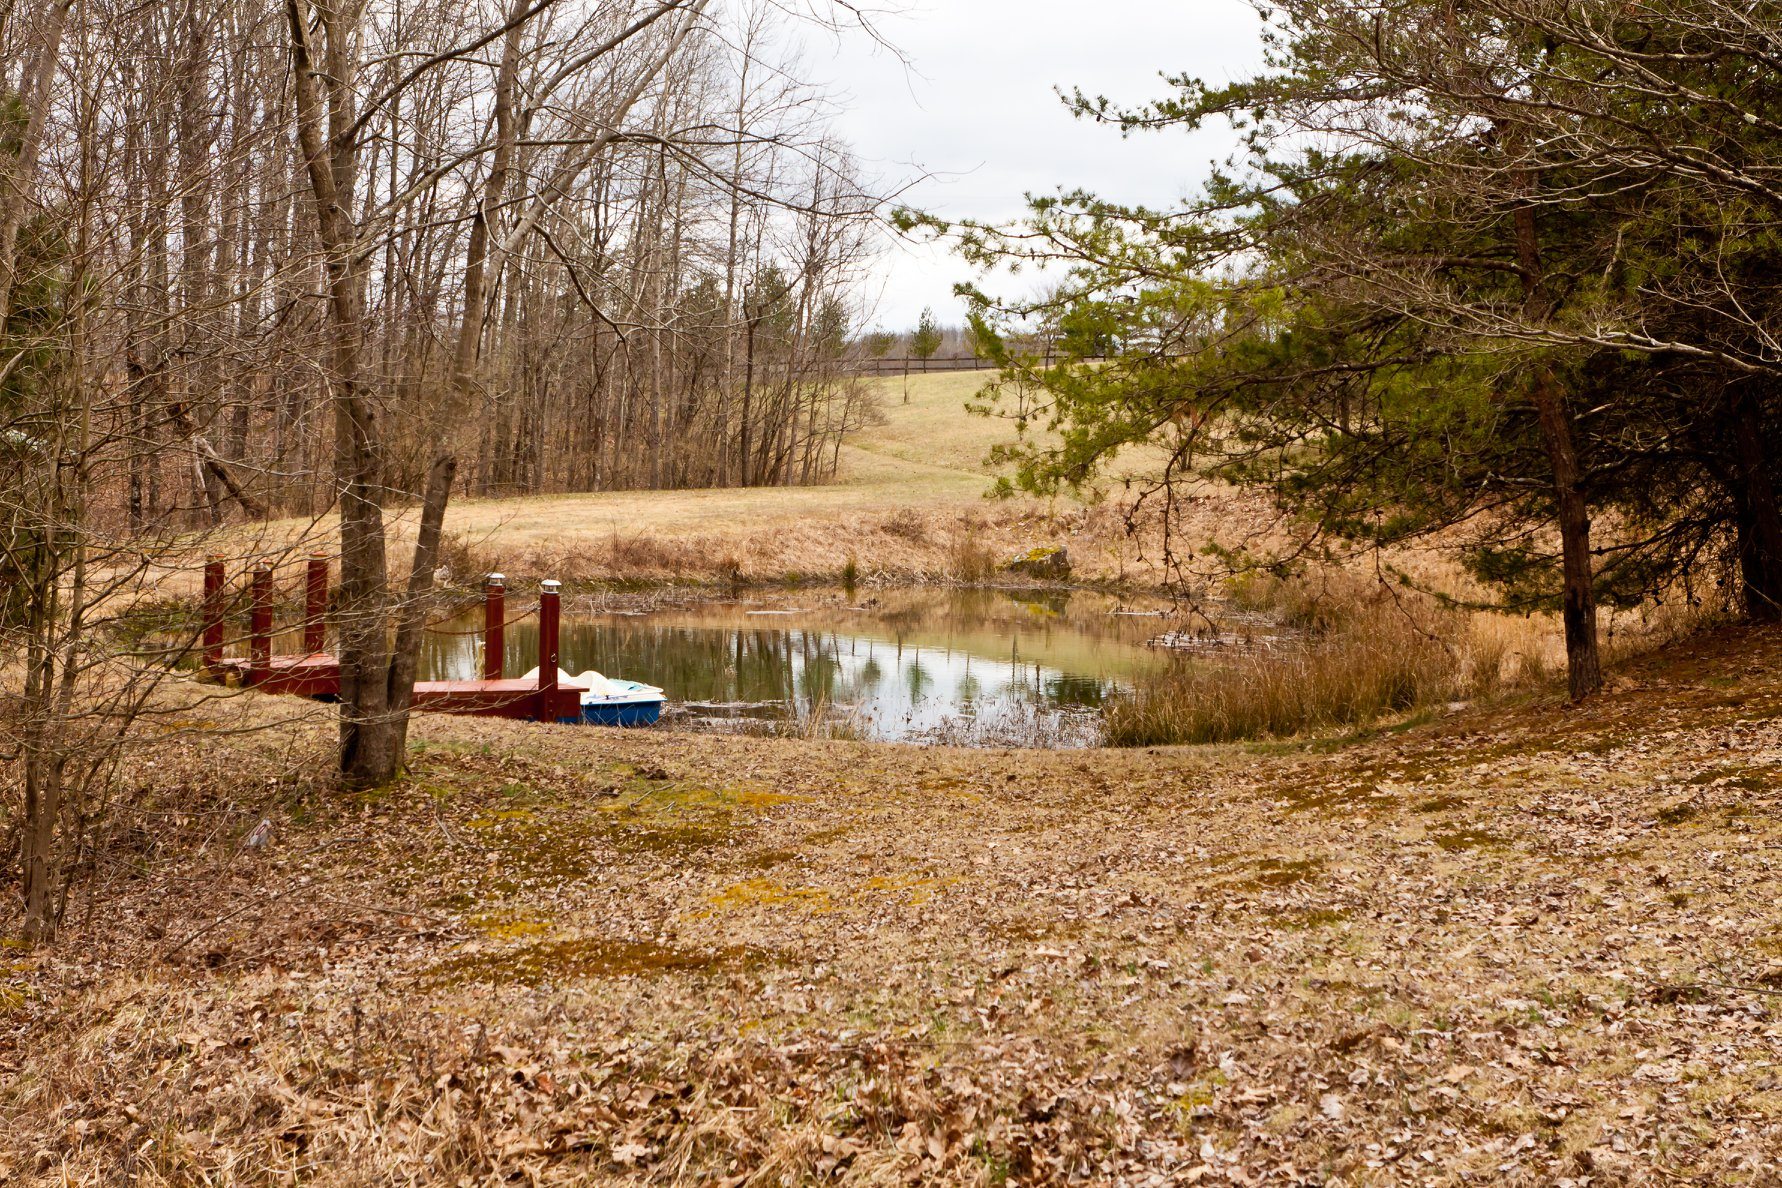 Photo 2175_7823.jpg - Small Pond on property
Paddle boat and gazebo
